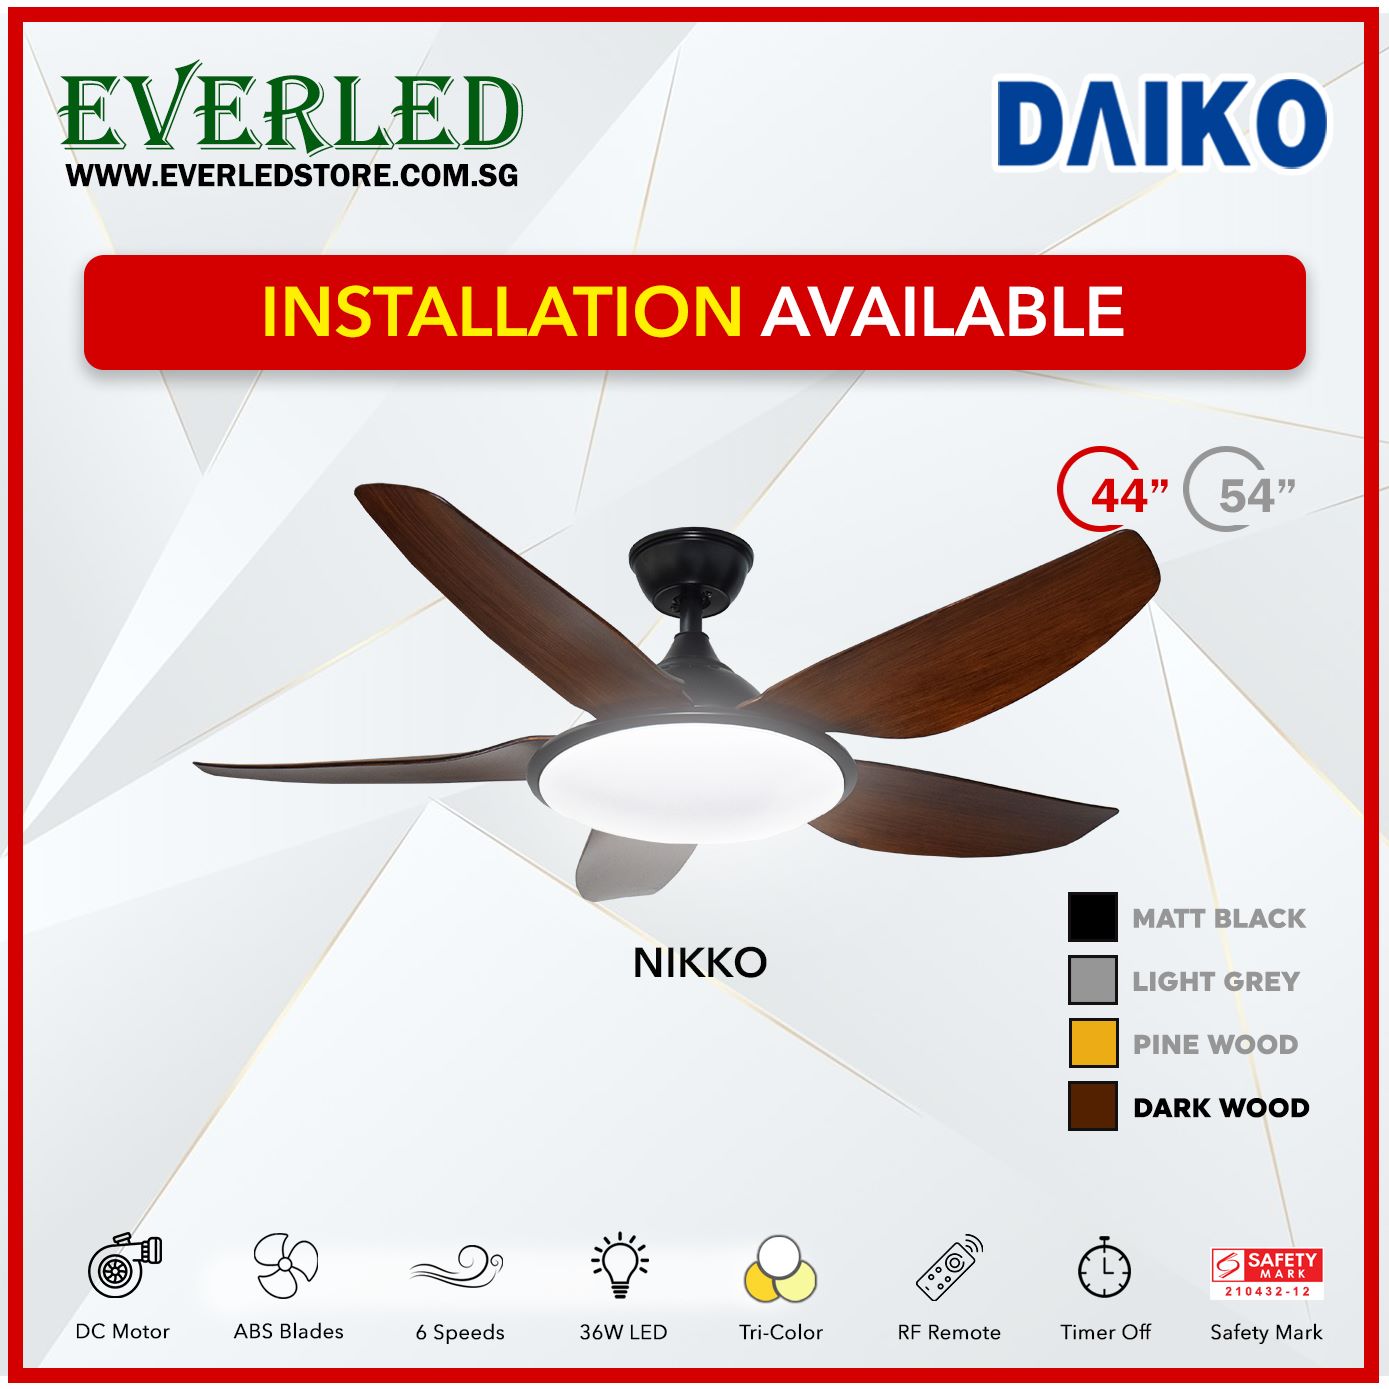 Daiko DC Nikko5 44"  with Tri-color LED (Inverter DC Fan)